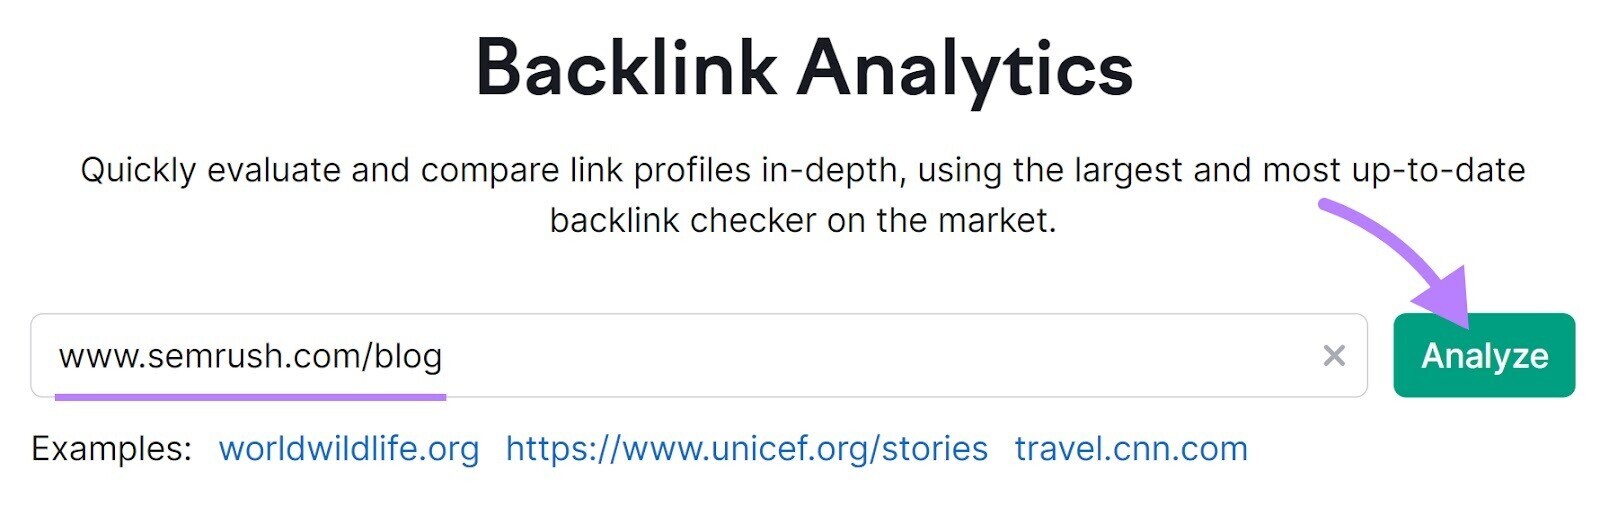 Backlink Analytics search bar